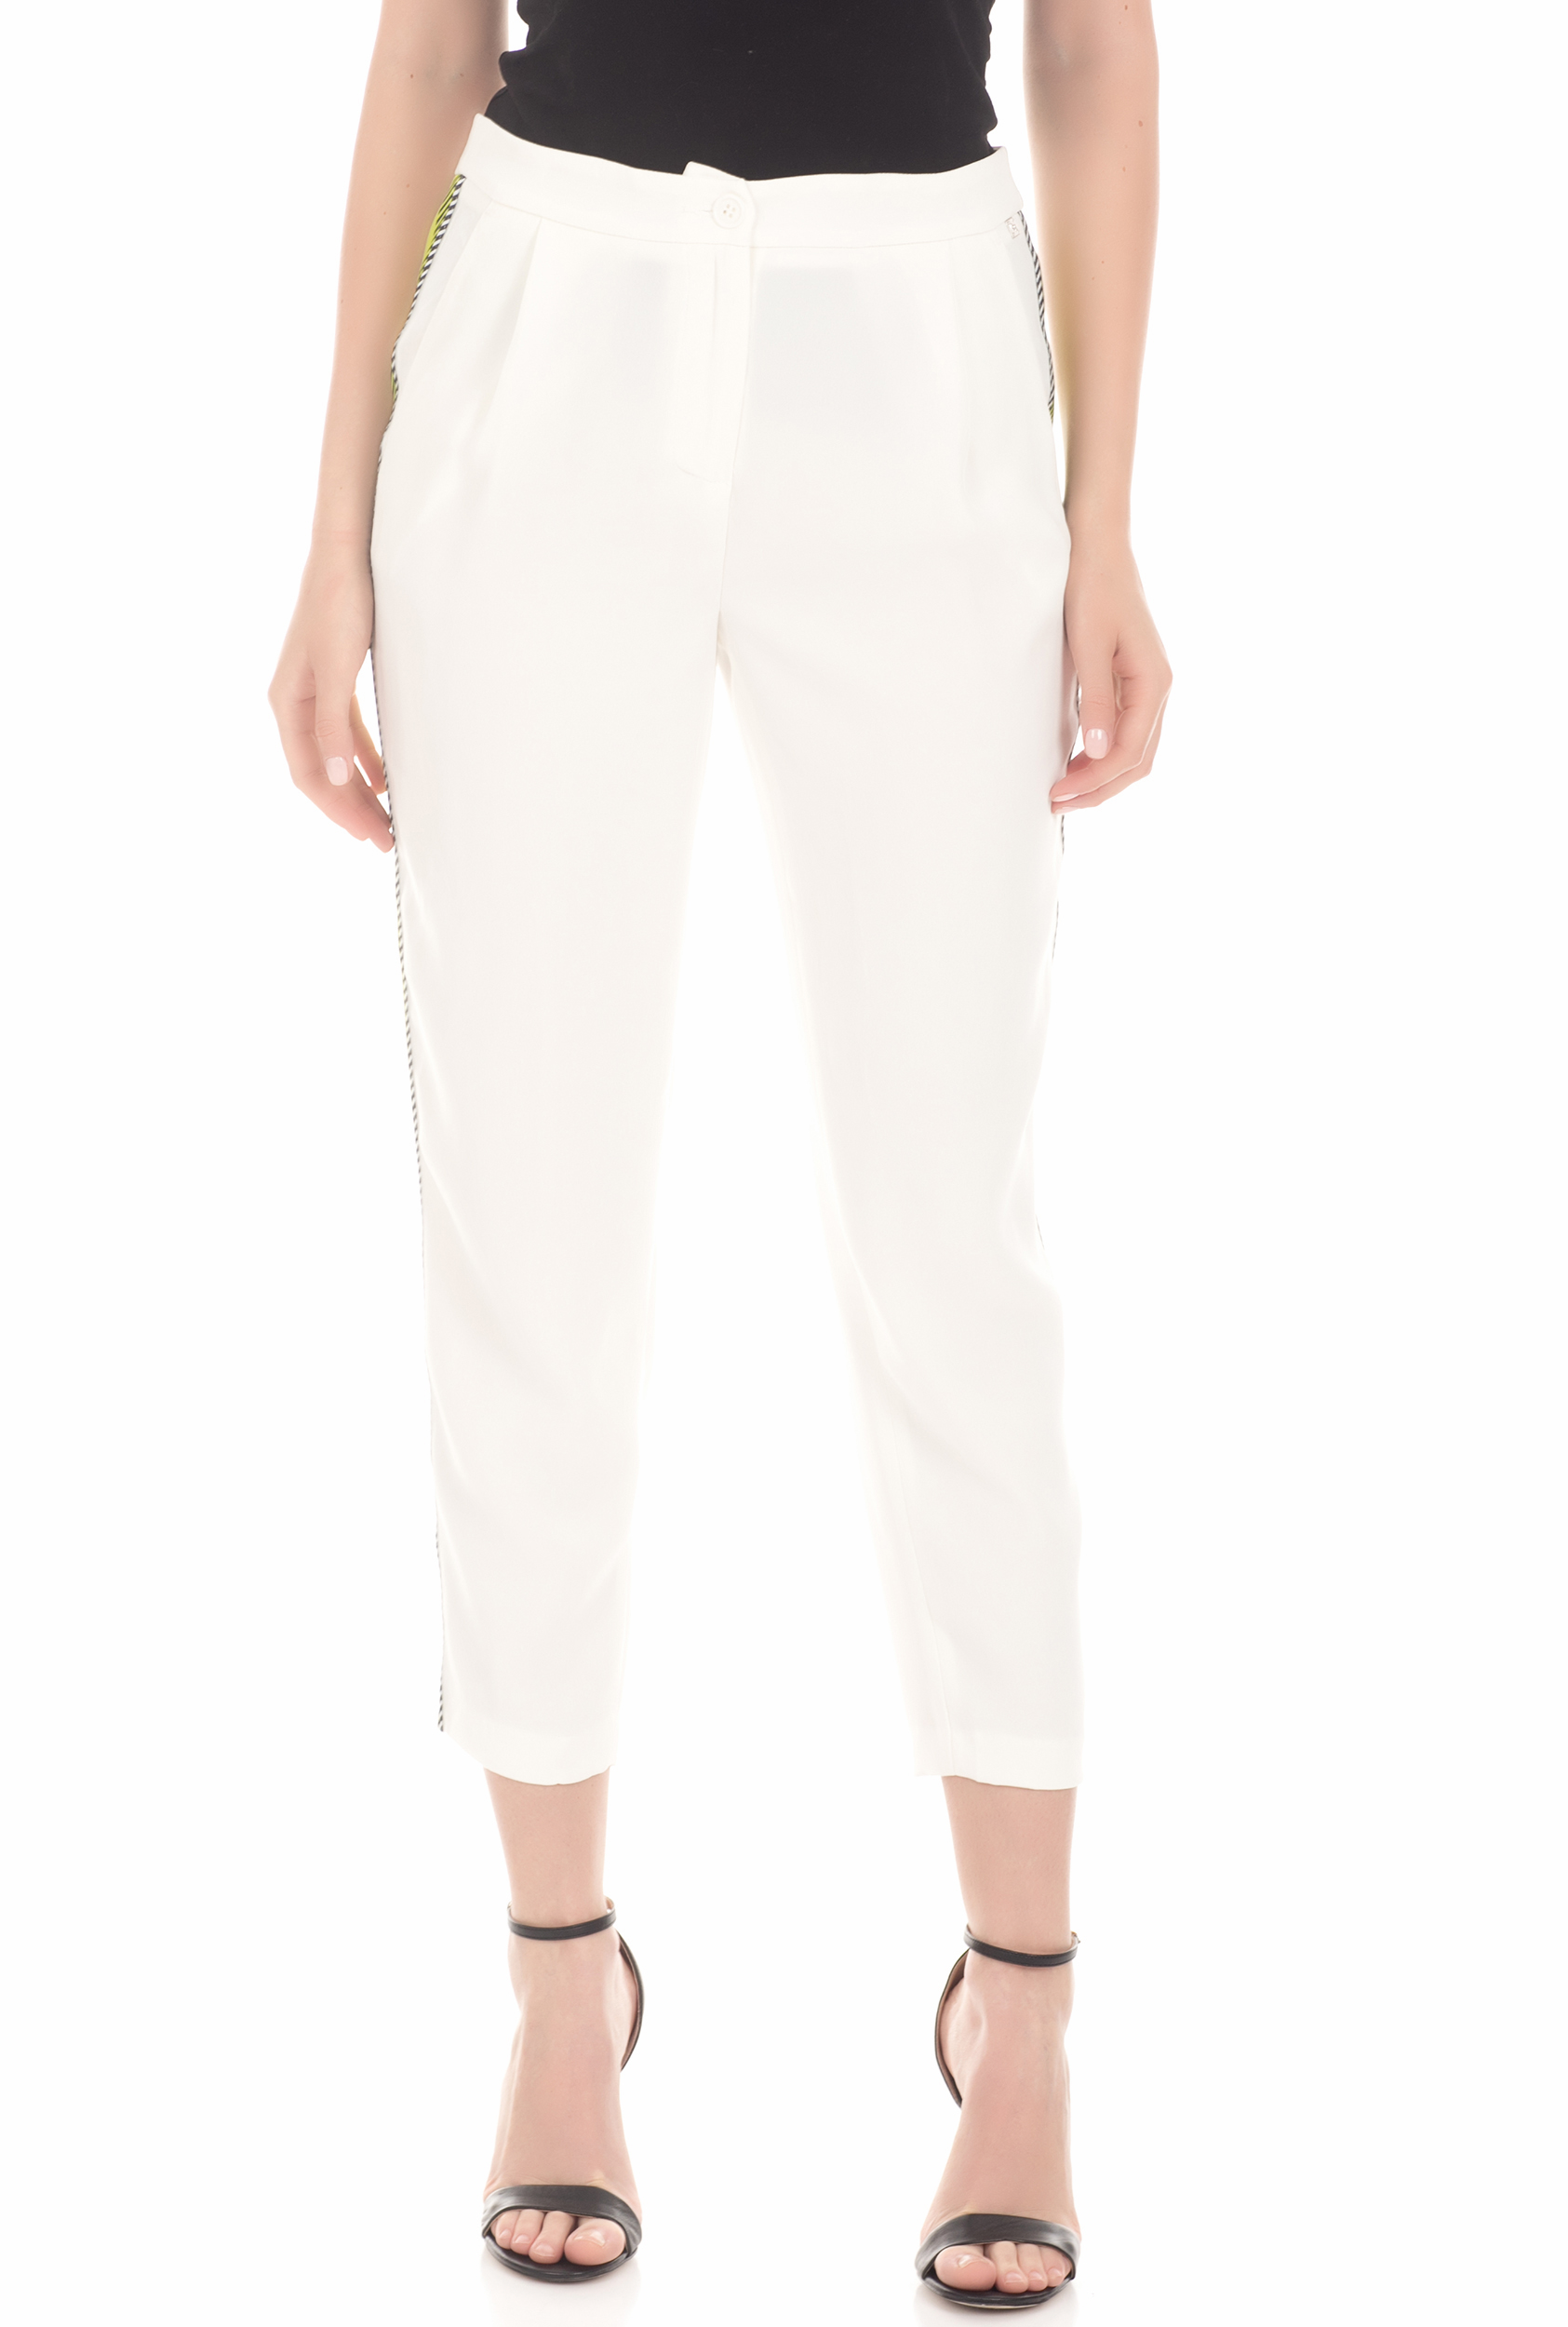 BYBLOS - Γυναικείο παντελόνι BYBLOS SMOKE λευκό Γυναικεία/Ρούχα/Παντελόνια/Ισια Γραμμή